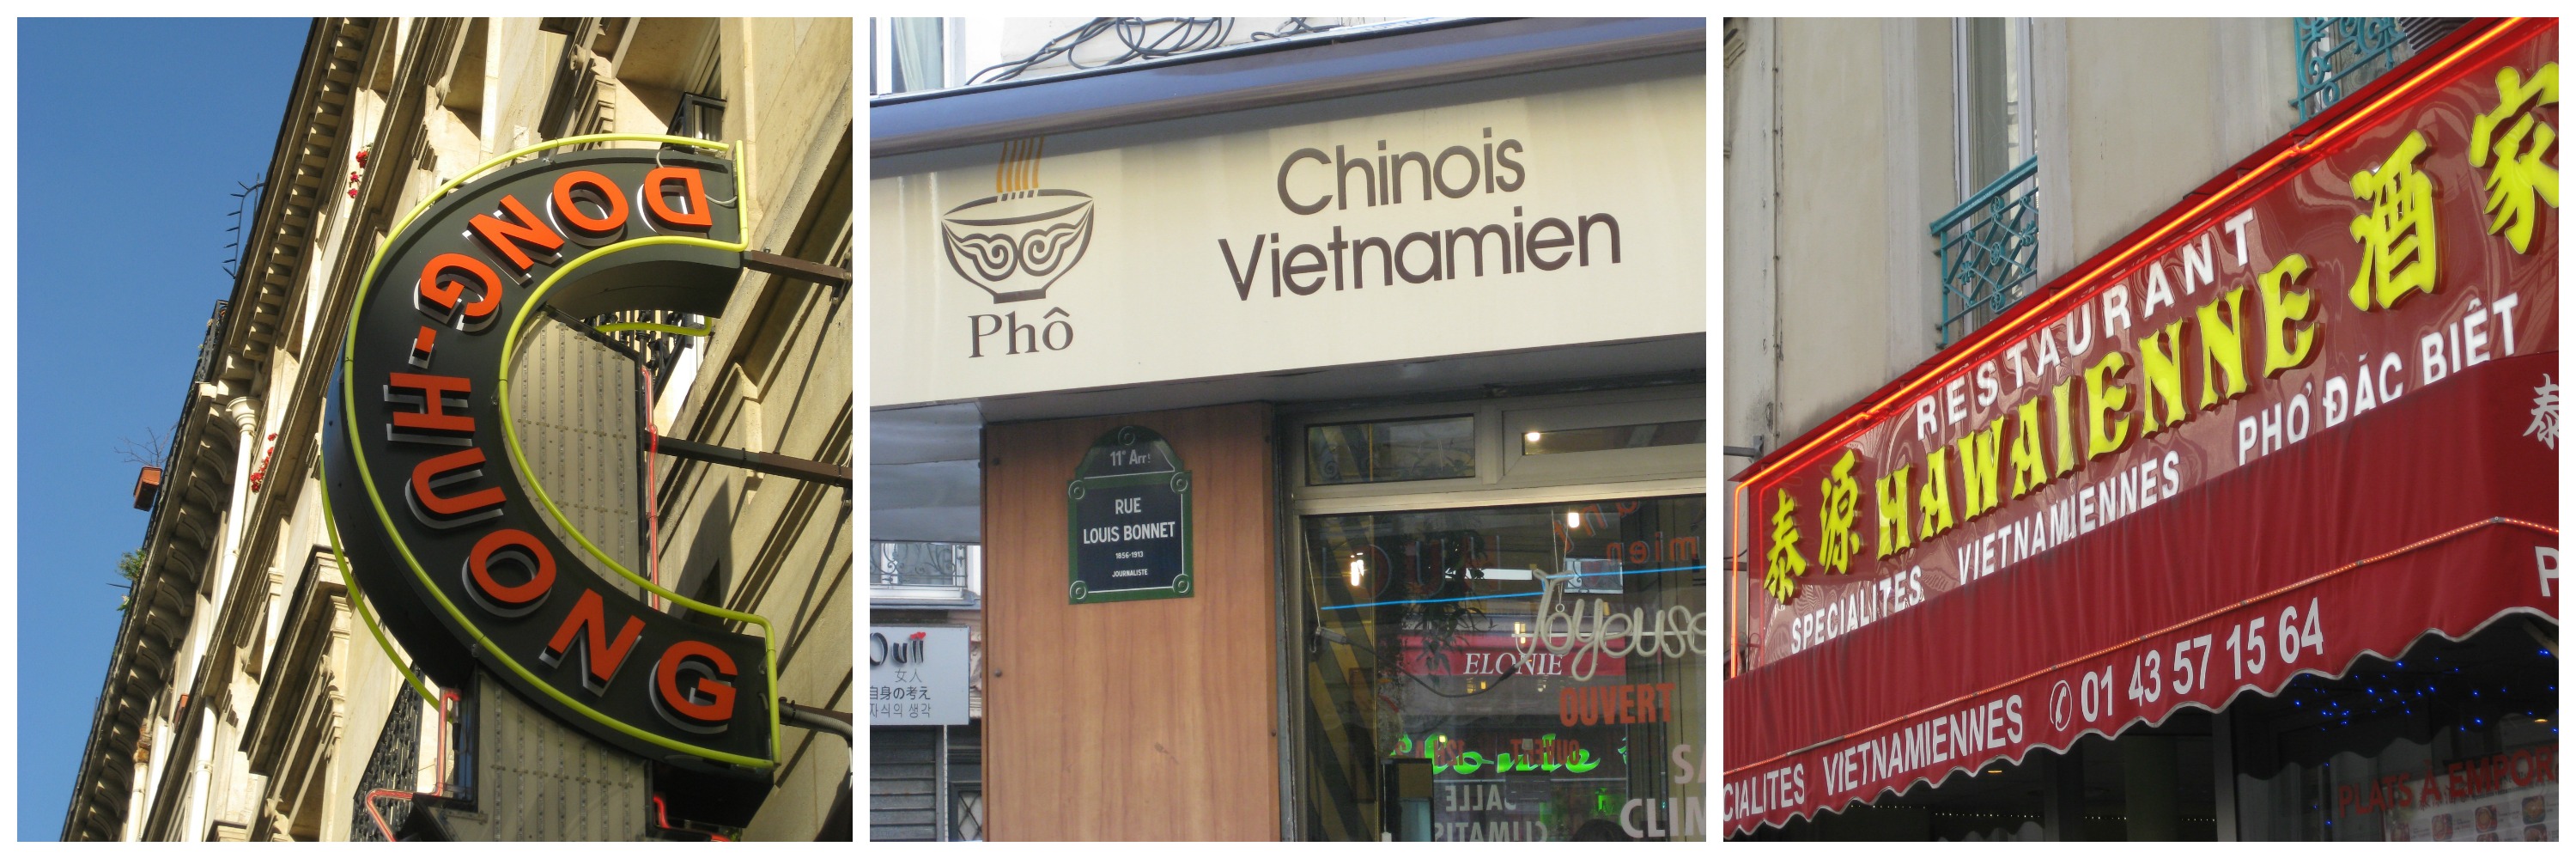 Resto chinois vietnamiens